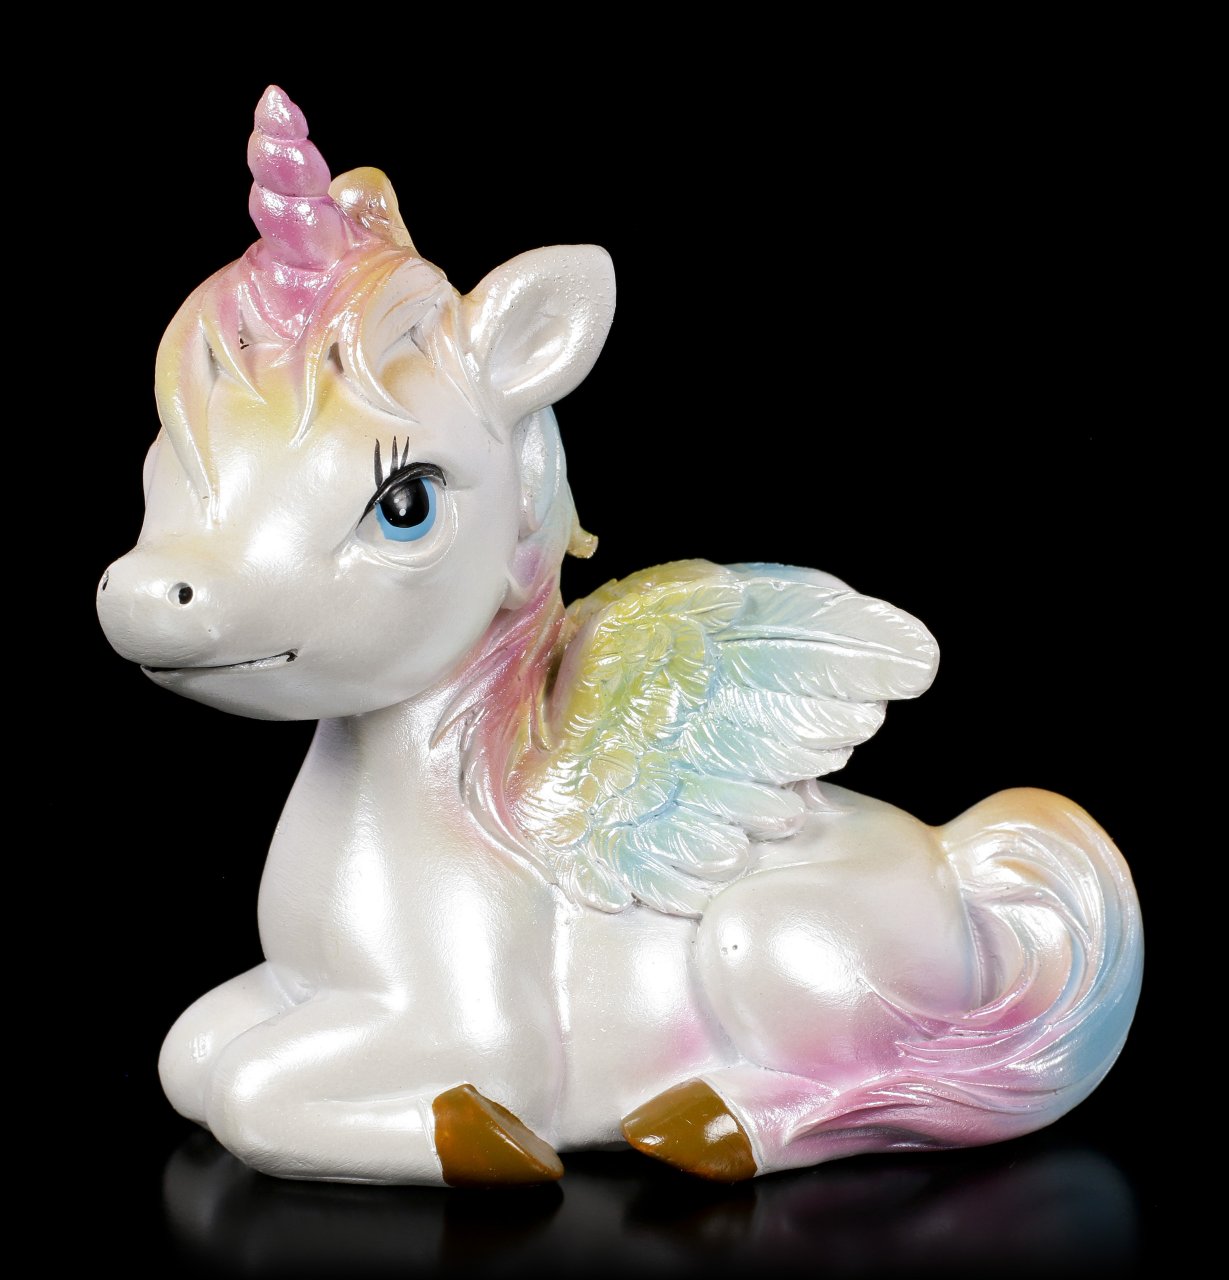 Baby Unicorn Figurine with Wings